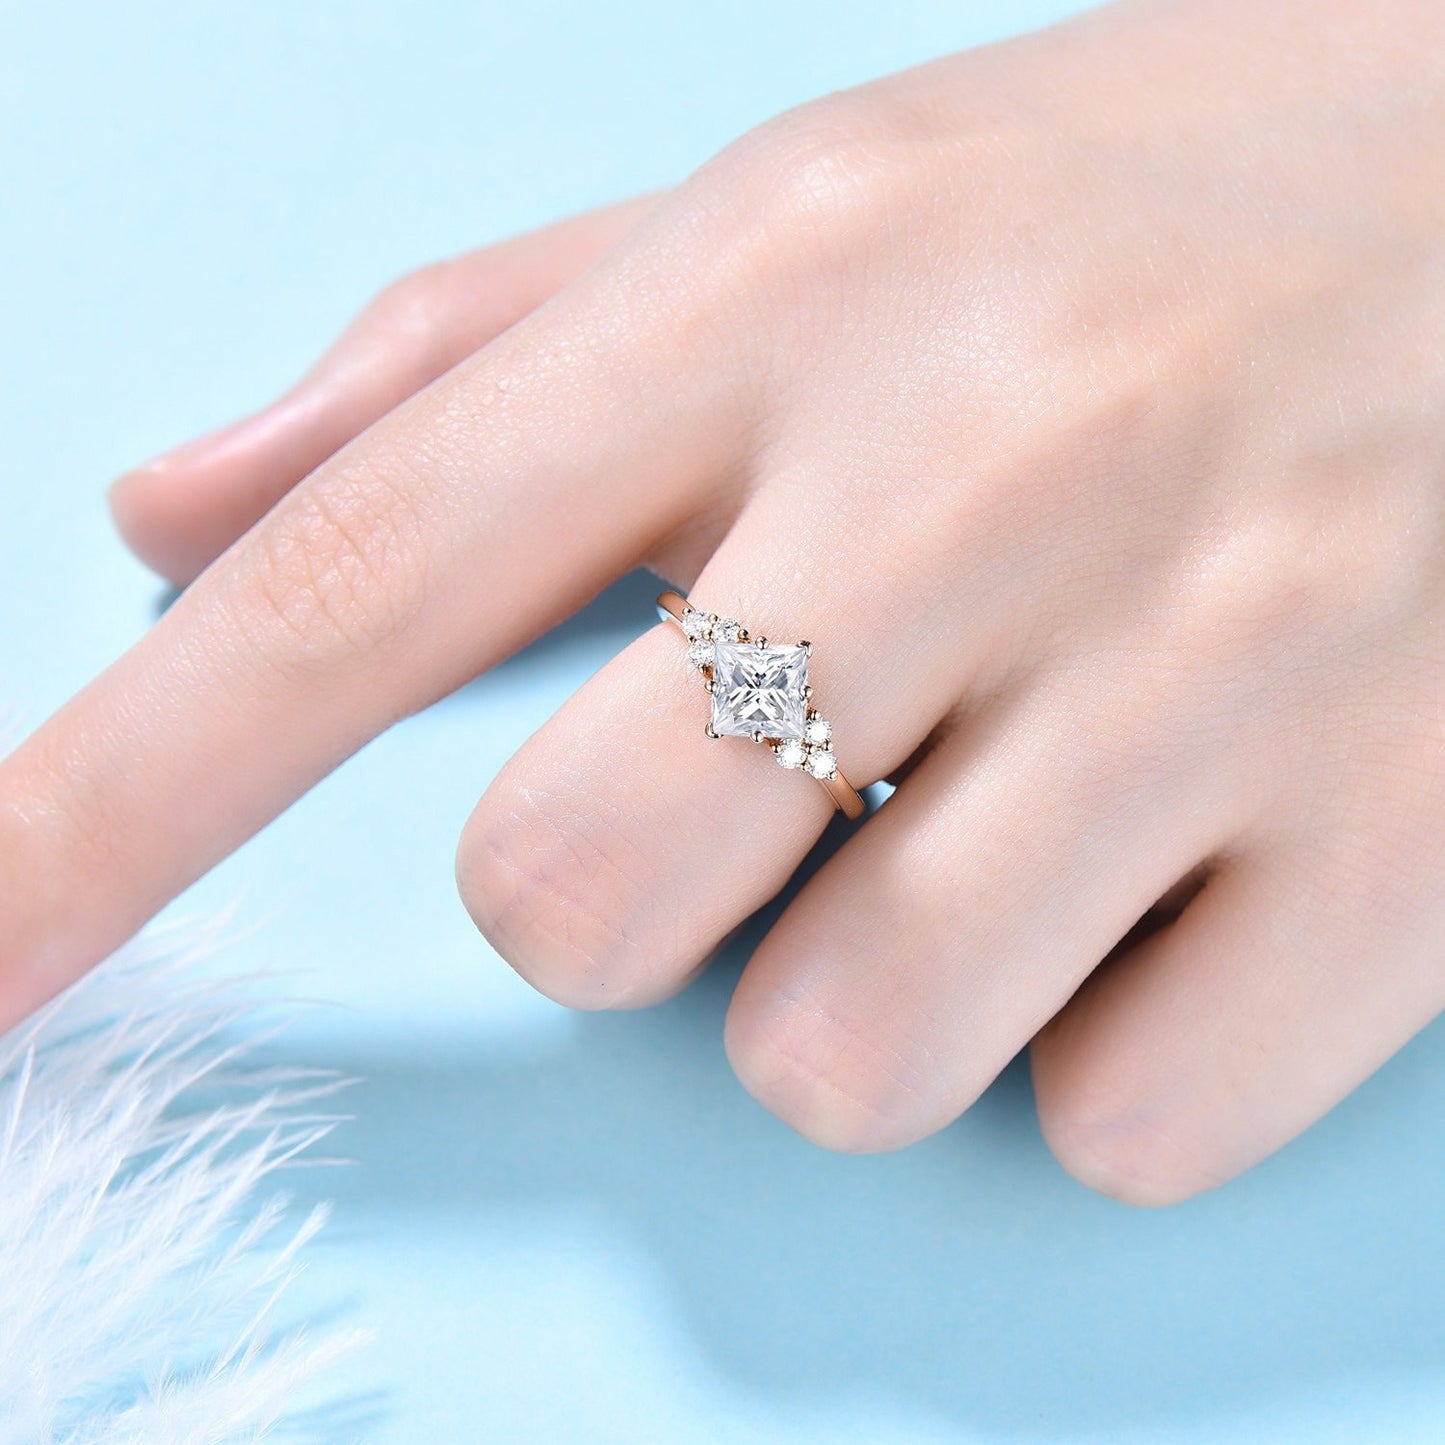 2ct Princess Cut Moissanite Engagement Rings Rose Gold Moissanite Diamond Cluster Wedding Ring Bridal Anniversary Promise Ring Gift for Her